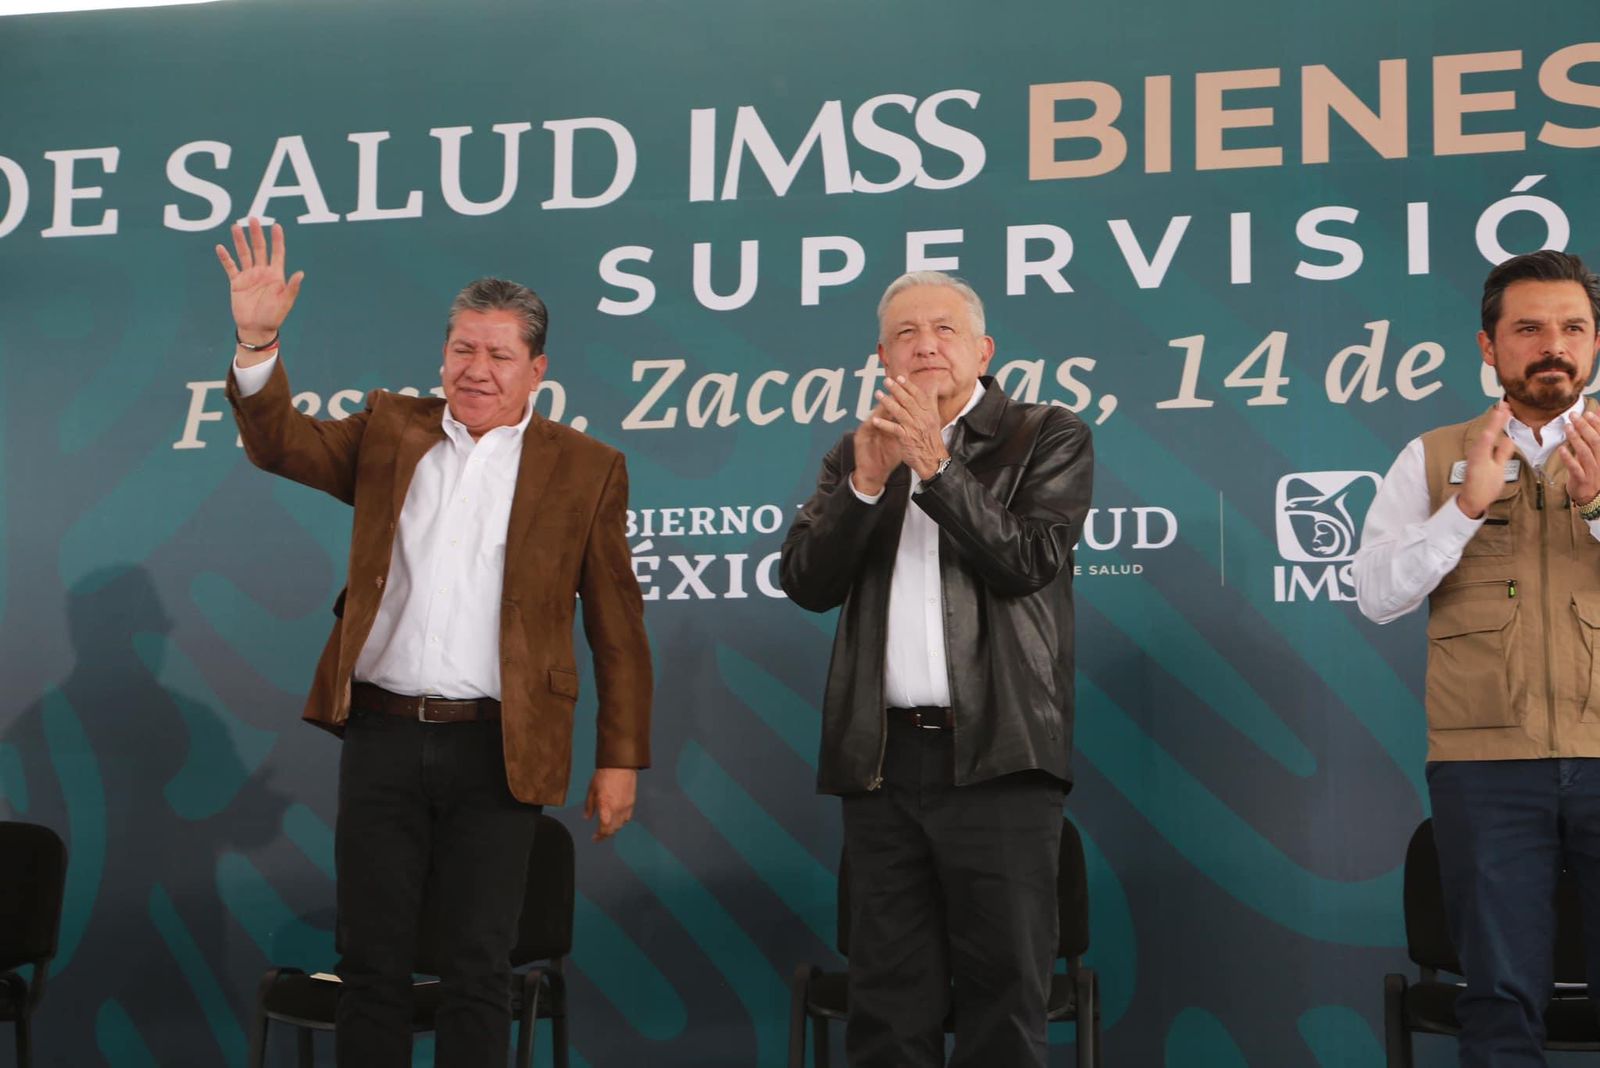 Entrega Presidente Andrés Manuel López Obrador a las fresnillenses el Hospital de la Mujer IMSS-Bienestar